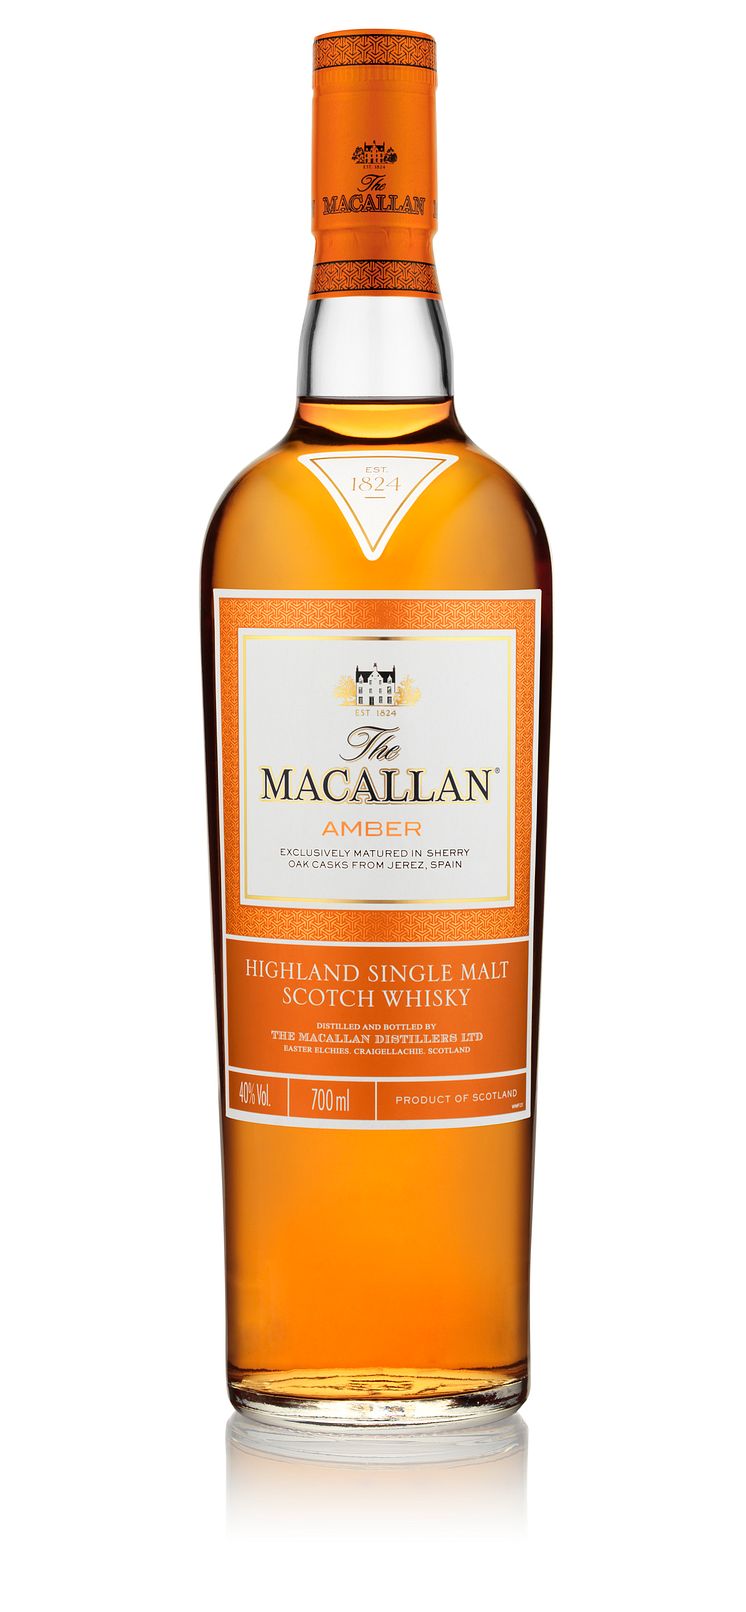 The Macallan Amber bottle